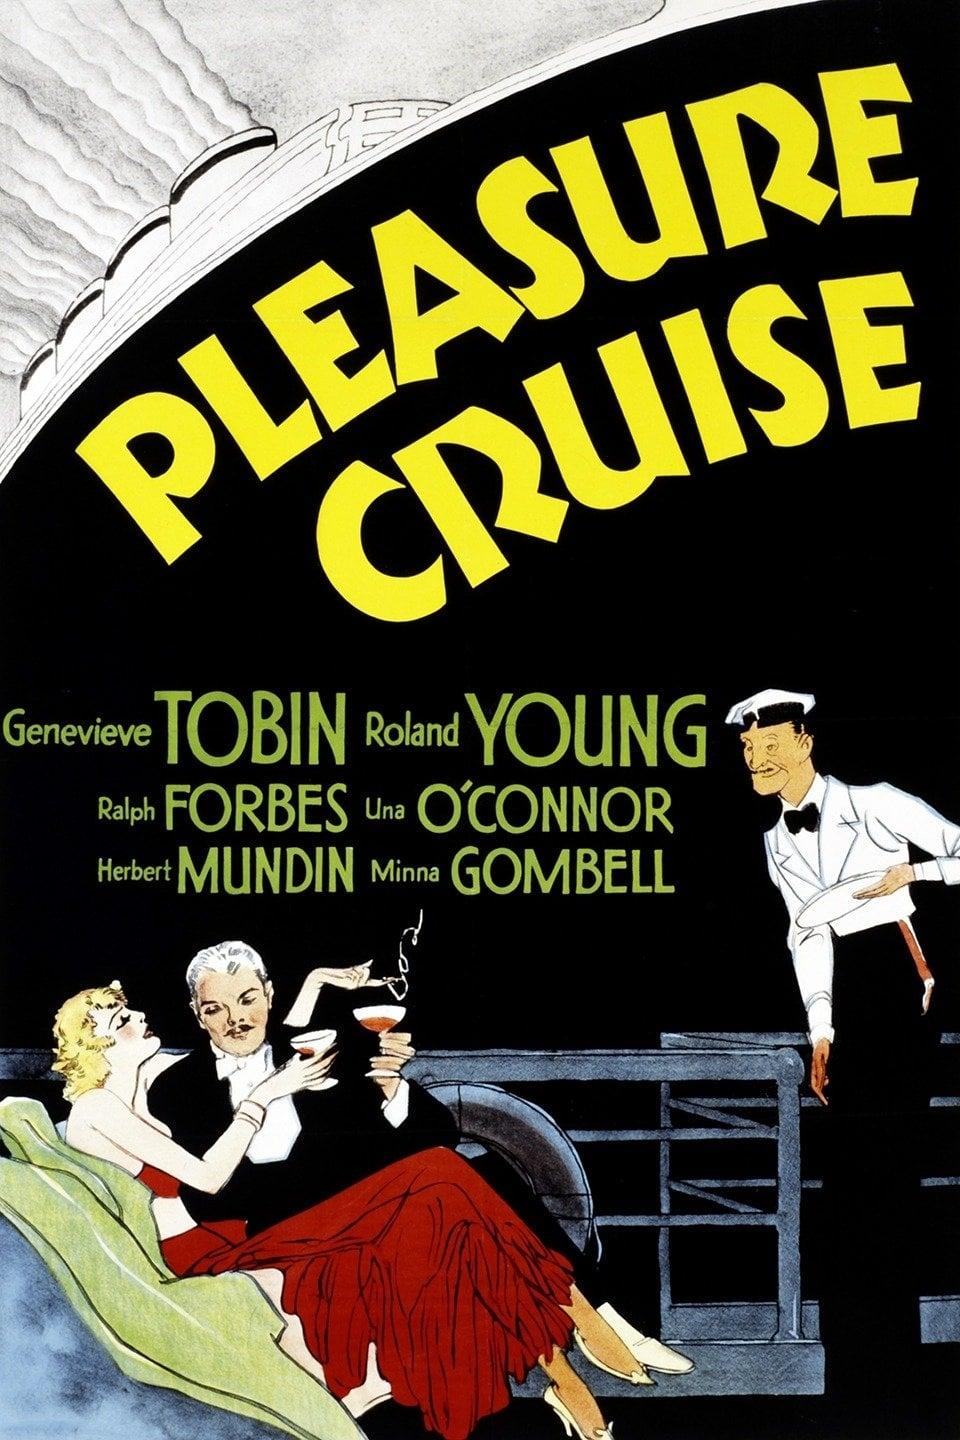 Pleasure Cruise poster